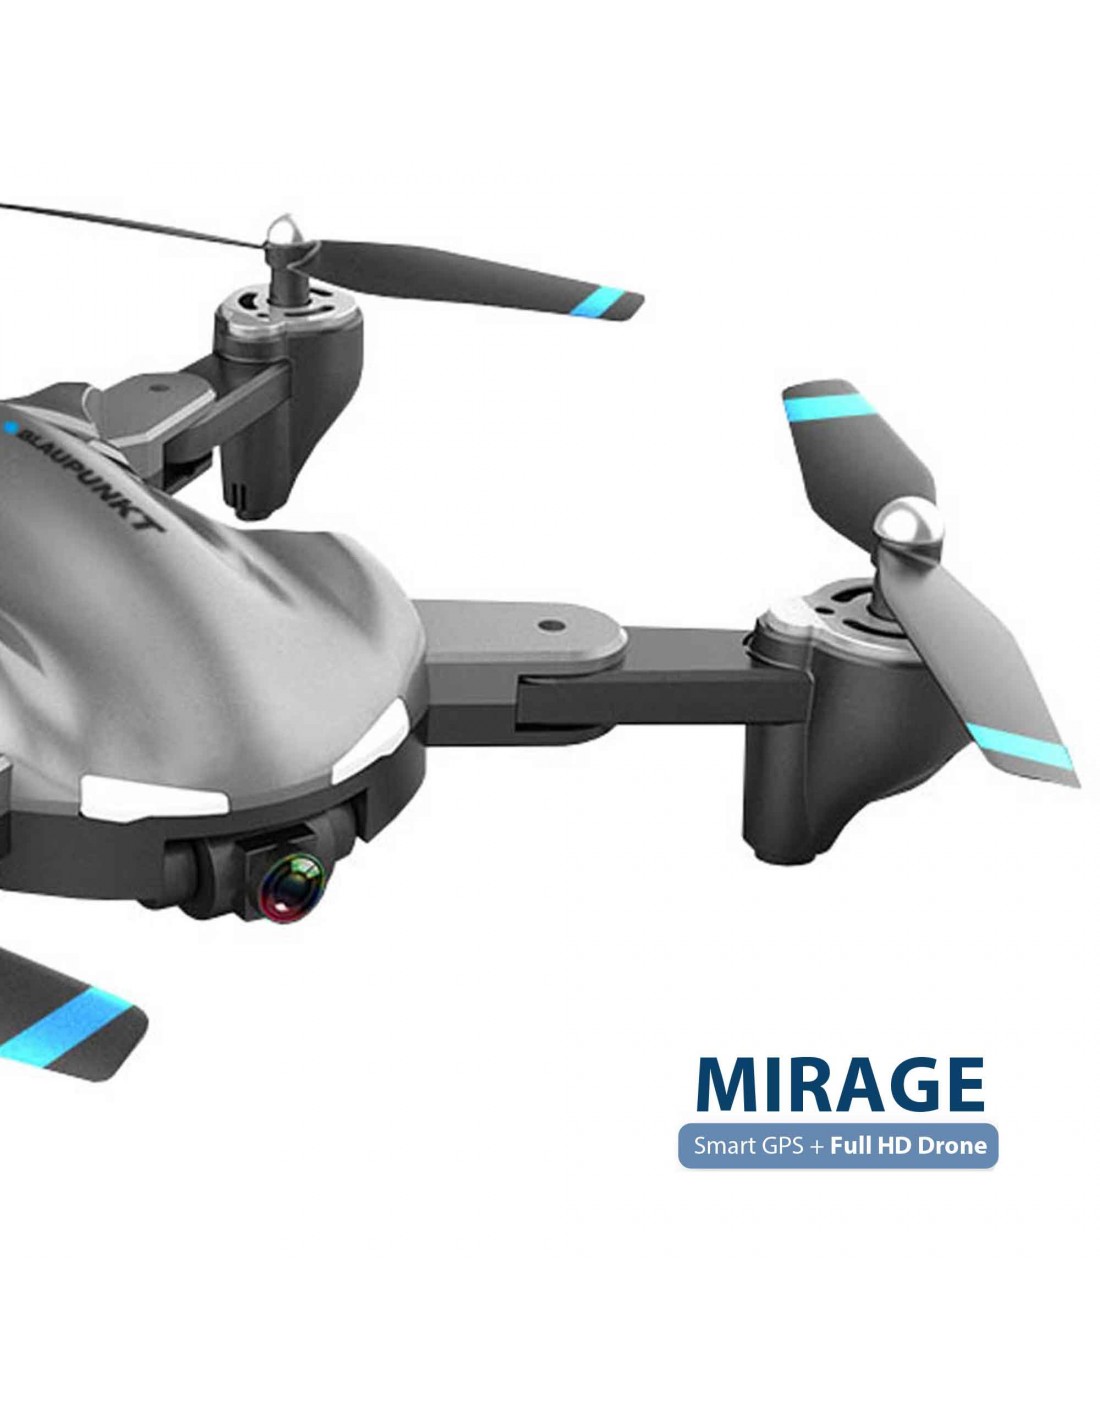 Drone Blaupunkt Mirage Camara FullHD